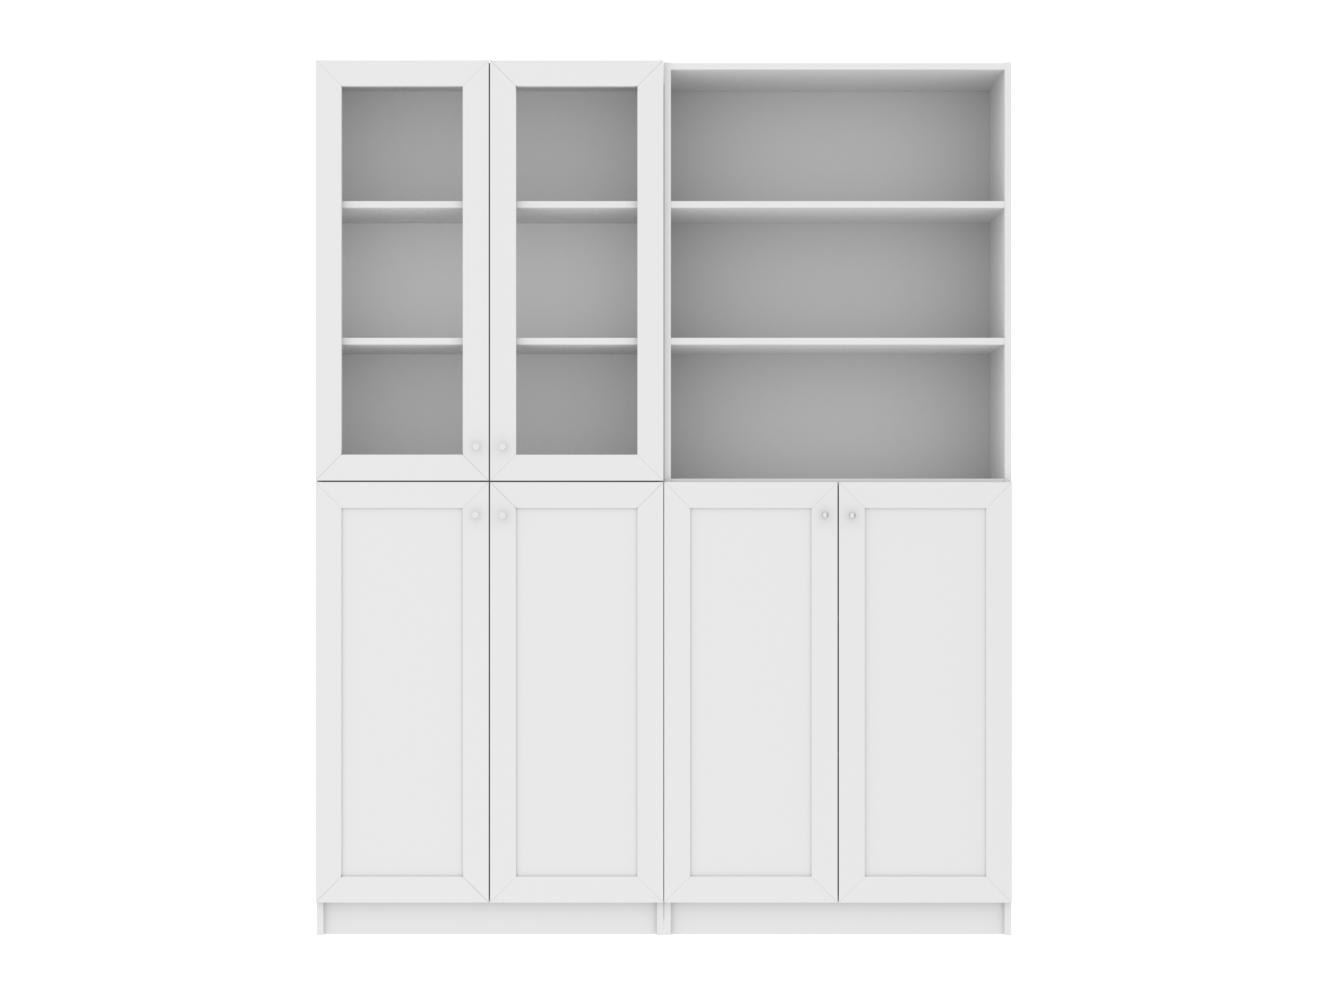 Книжный шкаф Билли 349 white ИКЕА (IKEA) изображение товара